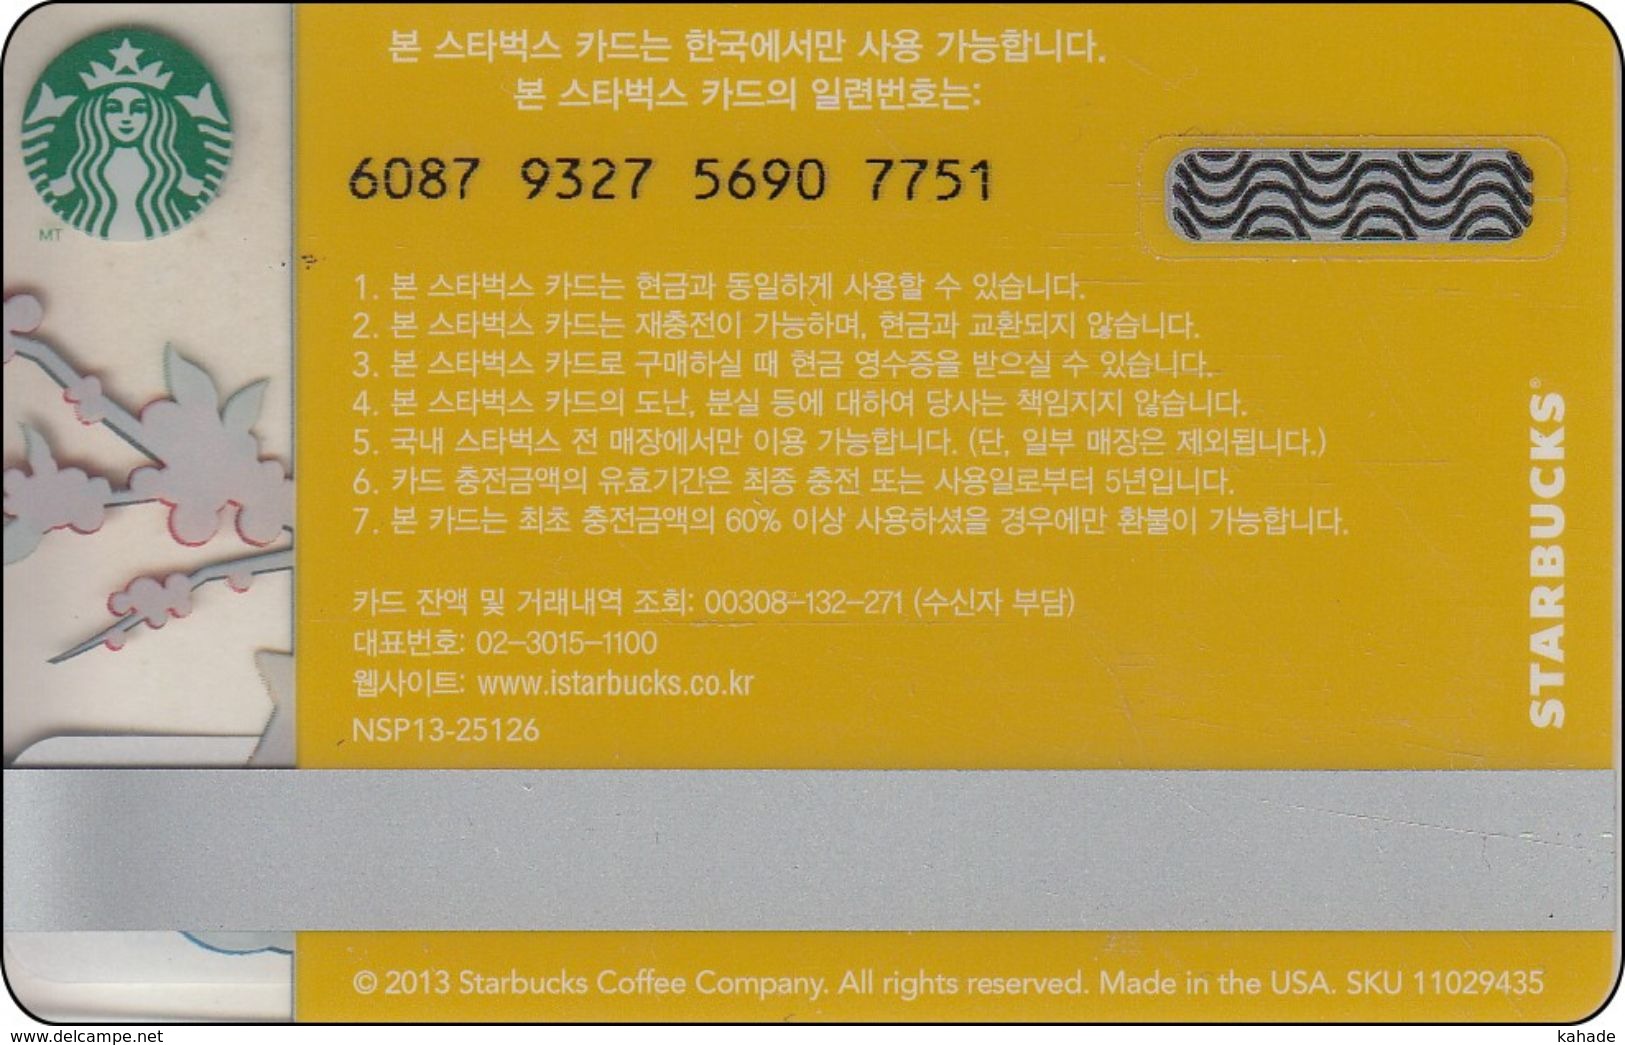 S- Korea Starbucks Card  14th Anniversary 2013-6087 - Gift Cards